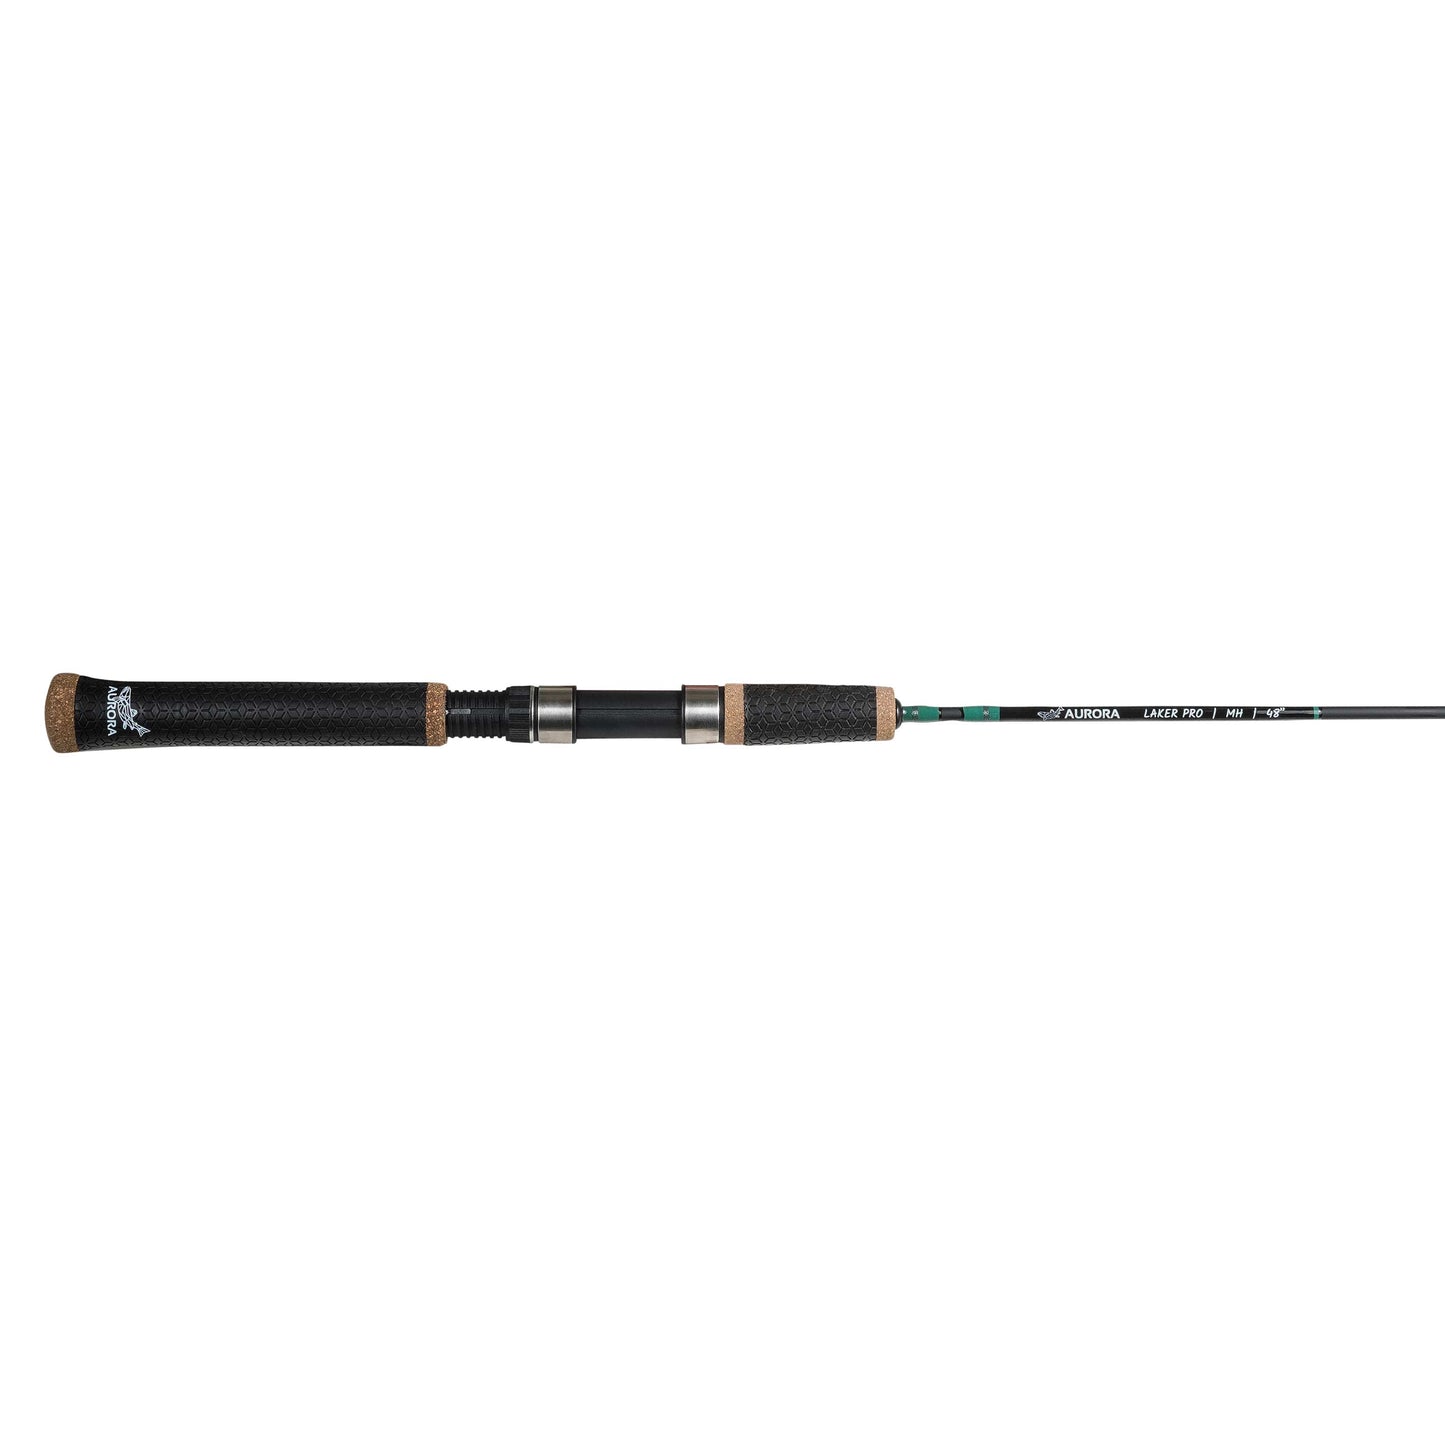 Laker Pro Ice Rod | Aurora Fishing Gear